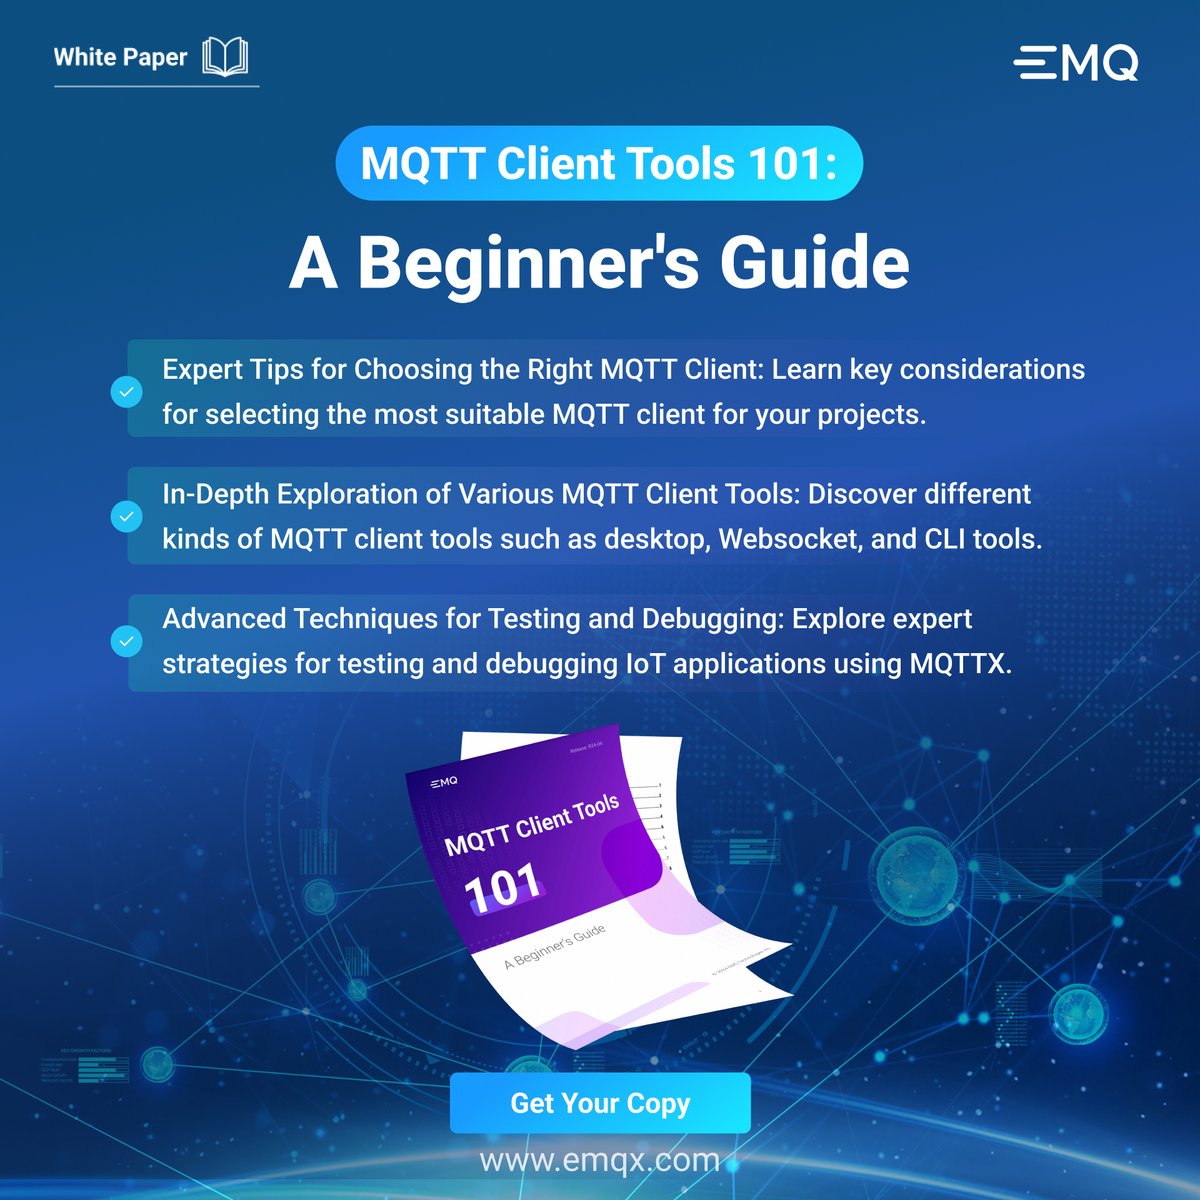 📘 Get our new eBook, 'MQTT Client Tools 101'. Expand your MQTT knowledge with expert advice, MQTT tools guide, and advanced techniques using MQTTX!

Grab your free copy now! ➡️ shorturl.at/DSX89

#eBook #MQTT #IoTProjects #MQTTTools #Learning social.emqx.com/u/jm5zdn